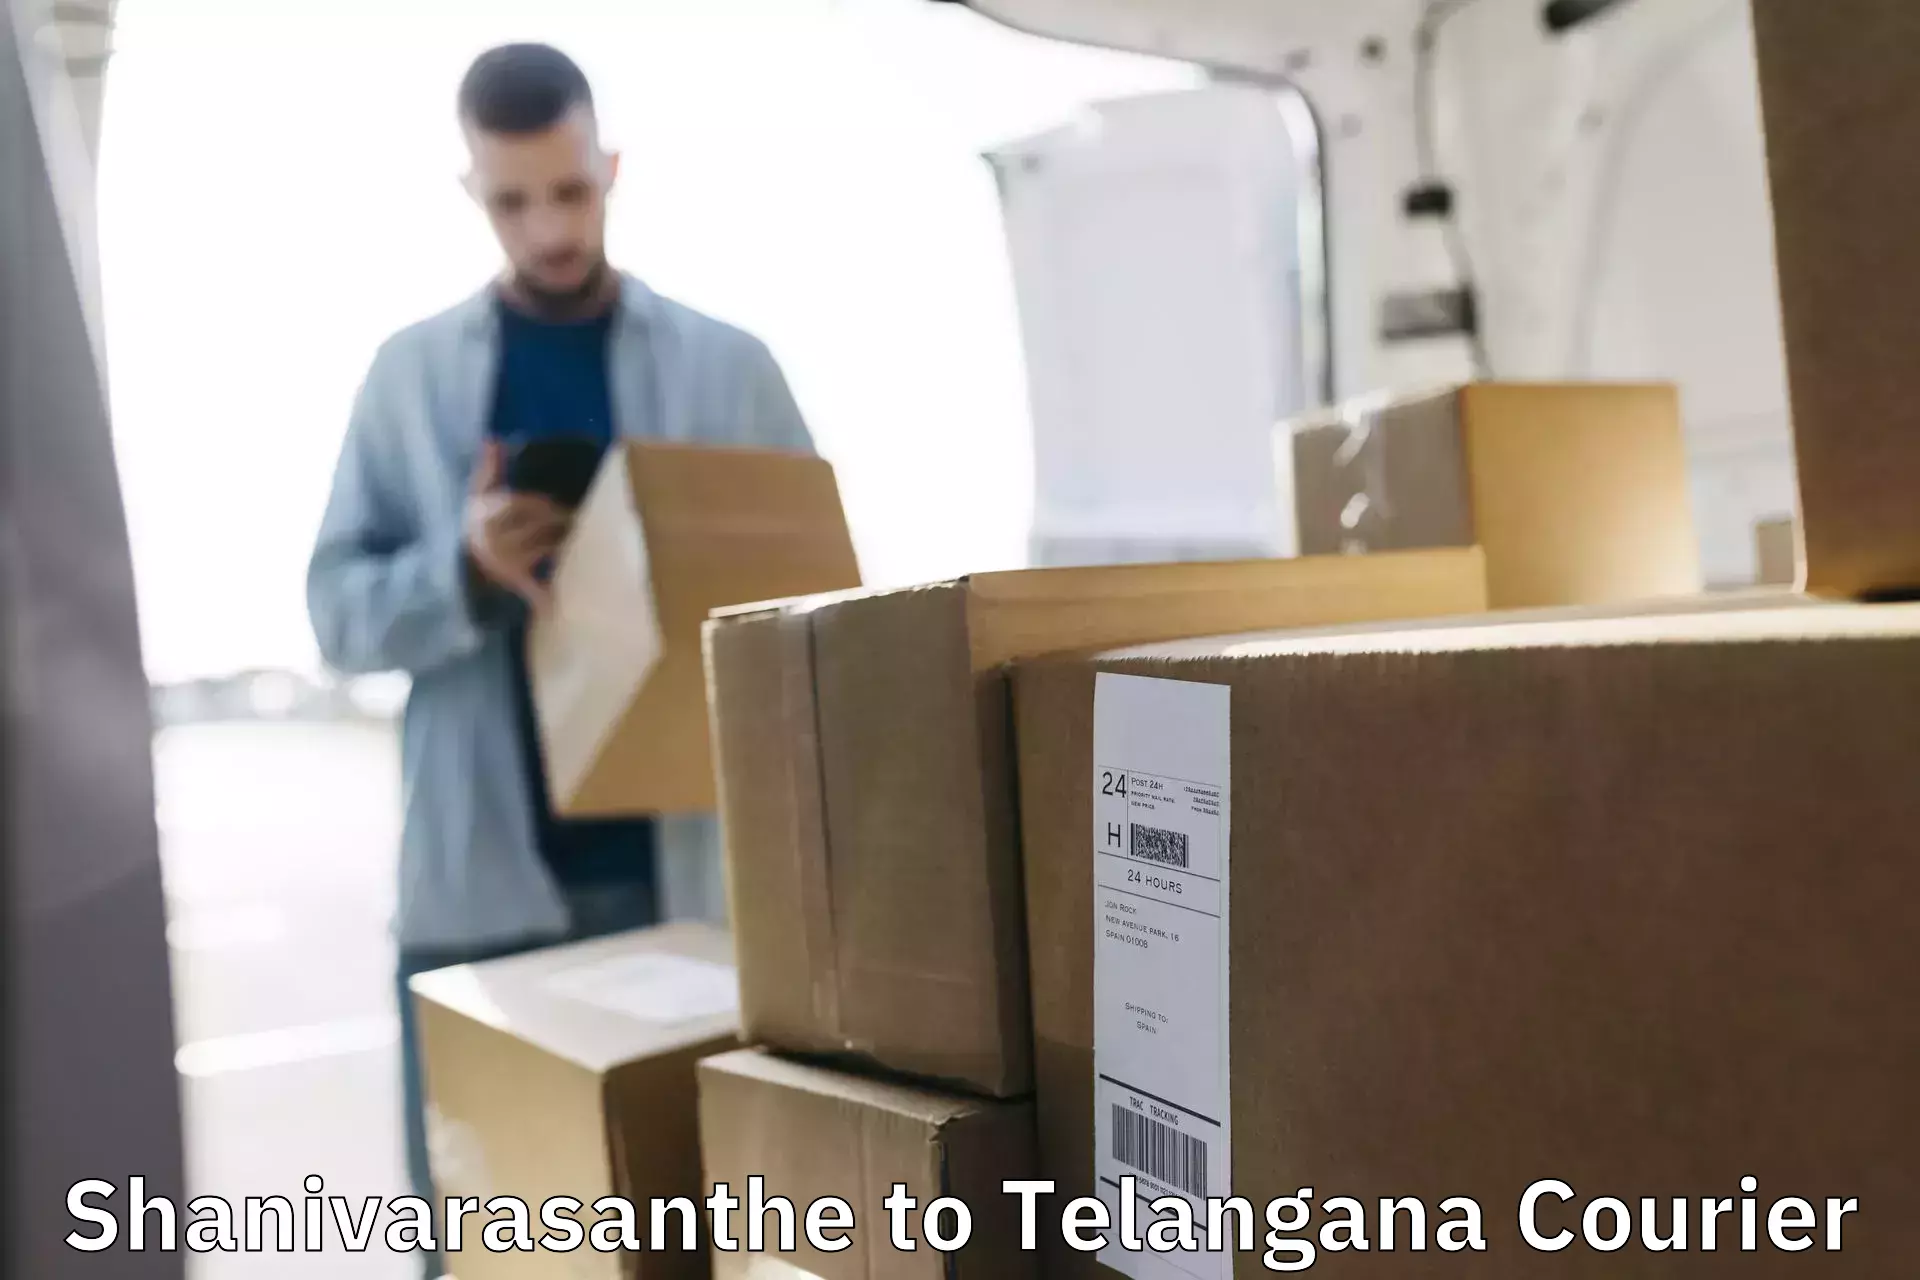 Professional courier handling Shanivarasanthe to Secunderabad